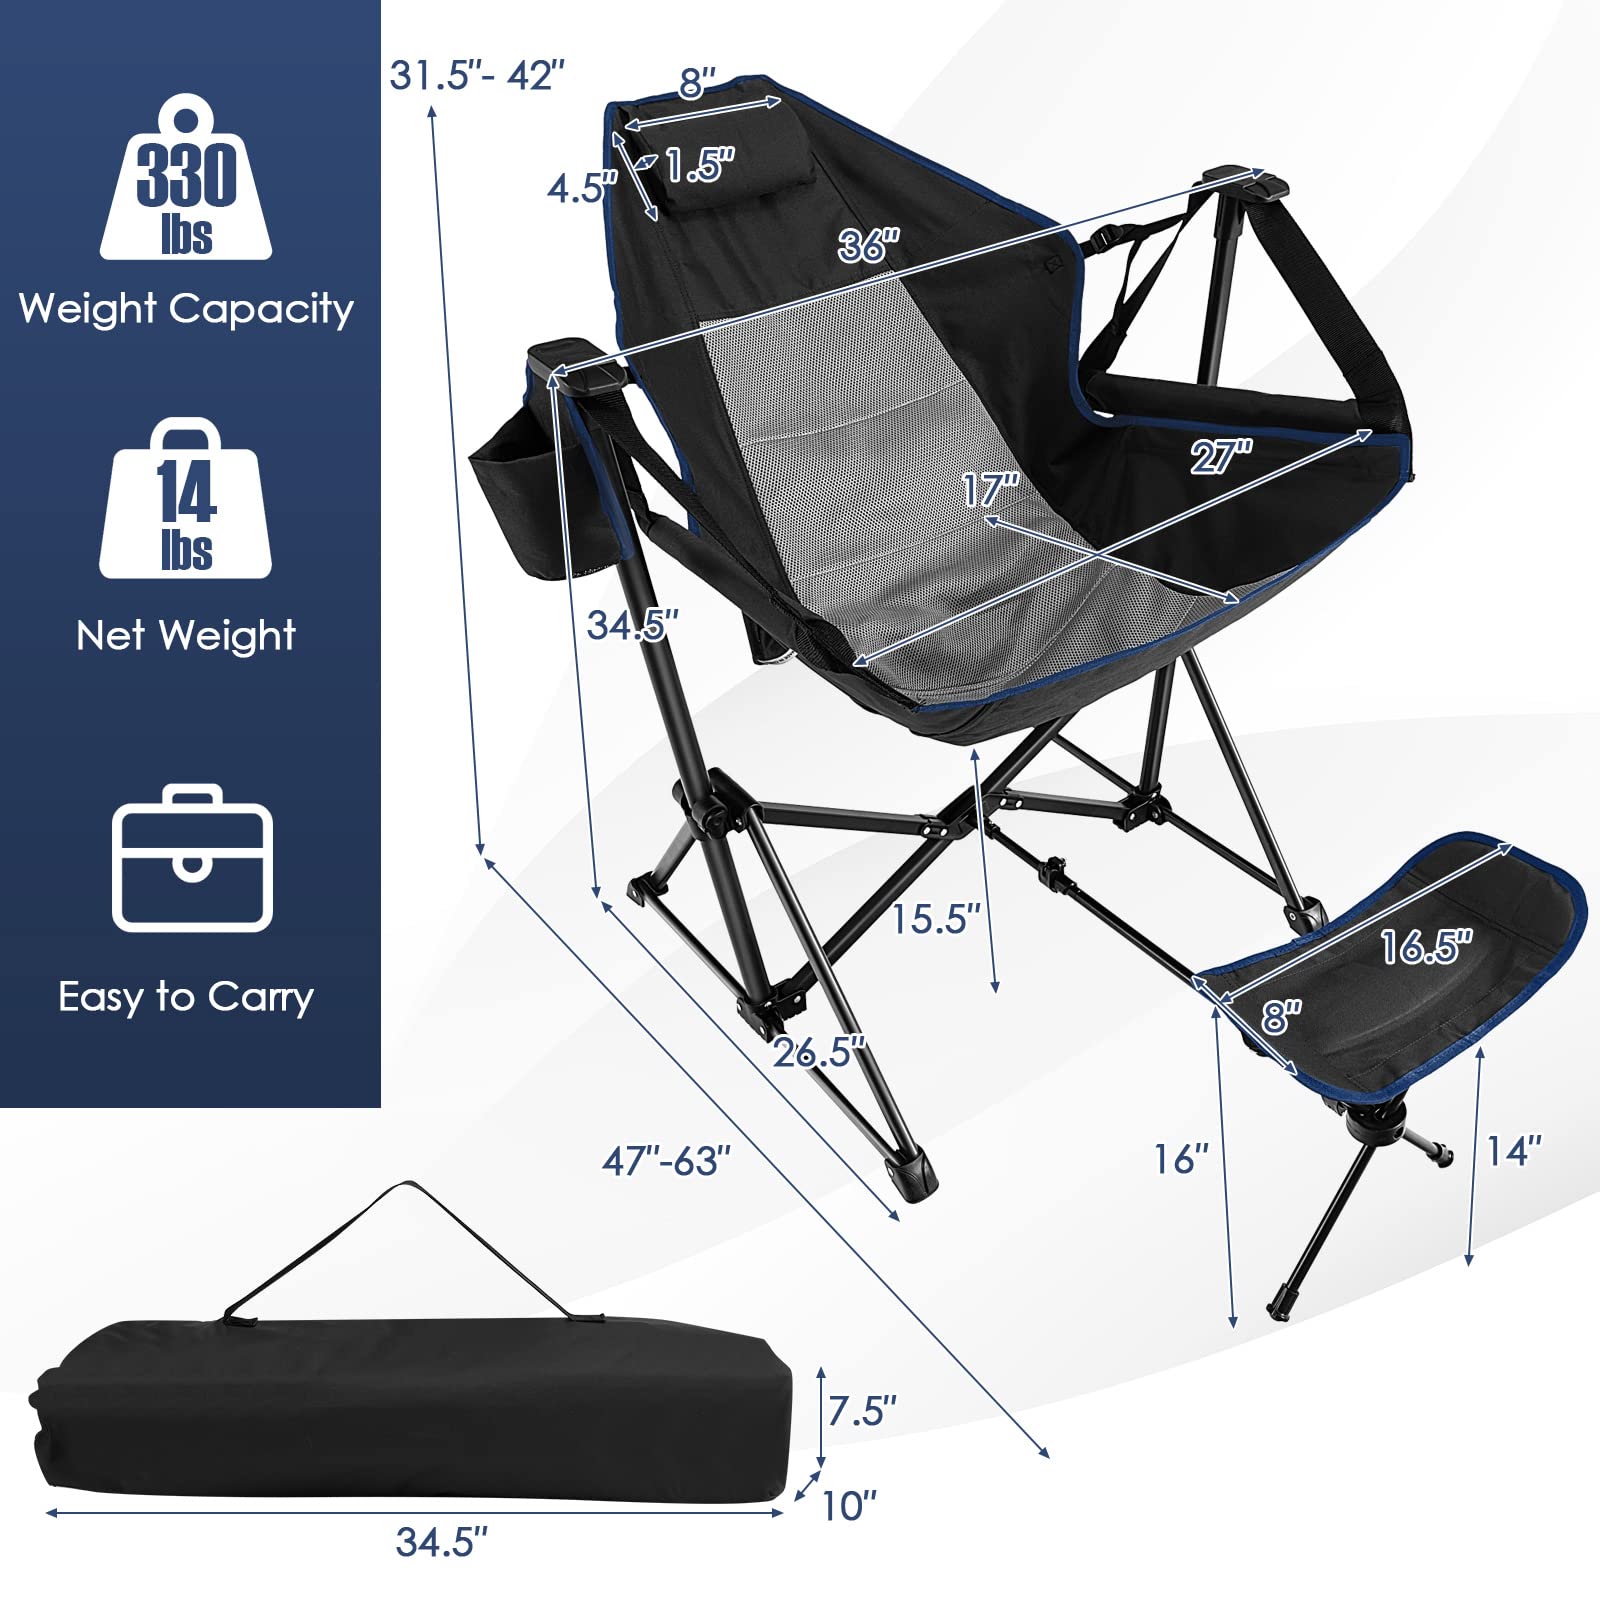 Giantex Outdoor Rocker Camping Chair - Rocking Chair